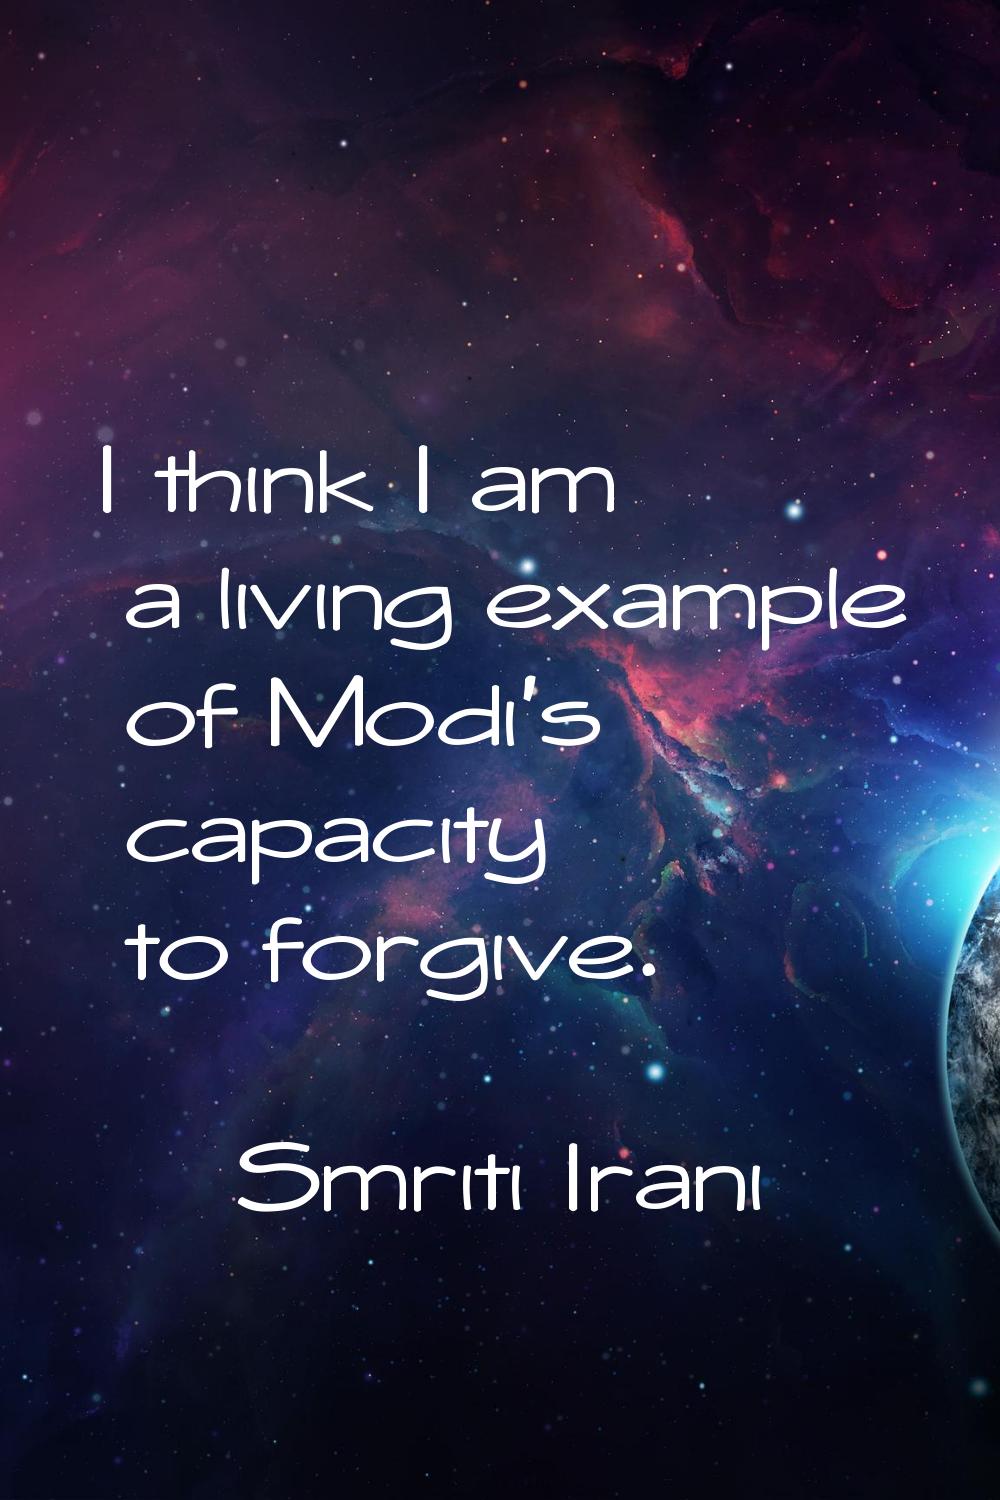 I think I am a living example of Modi's capacity to forgive.